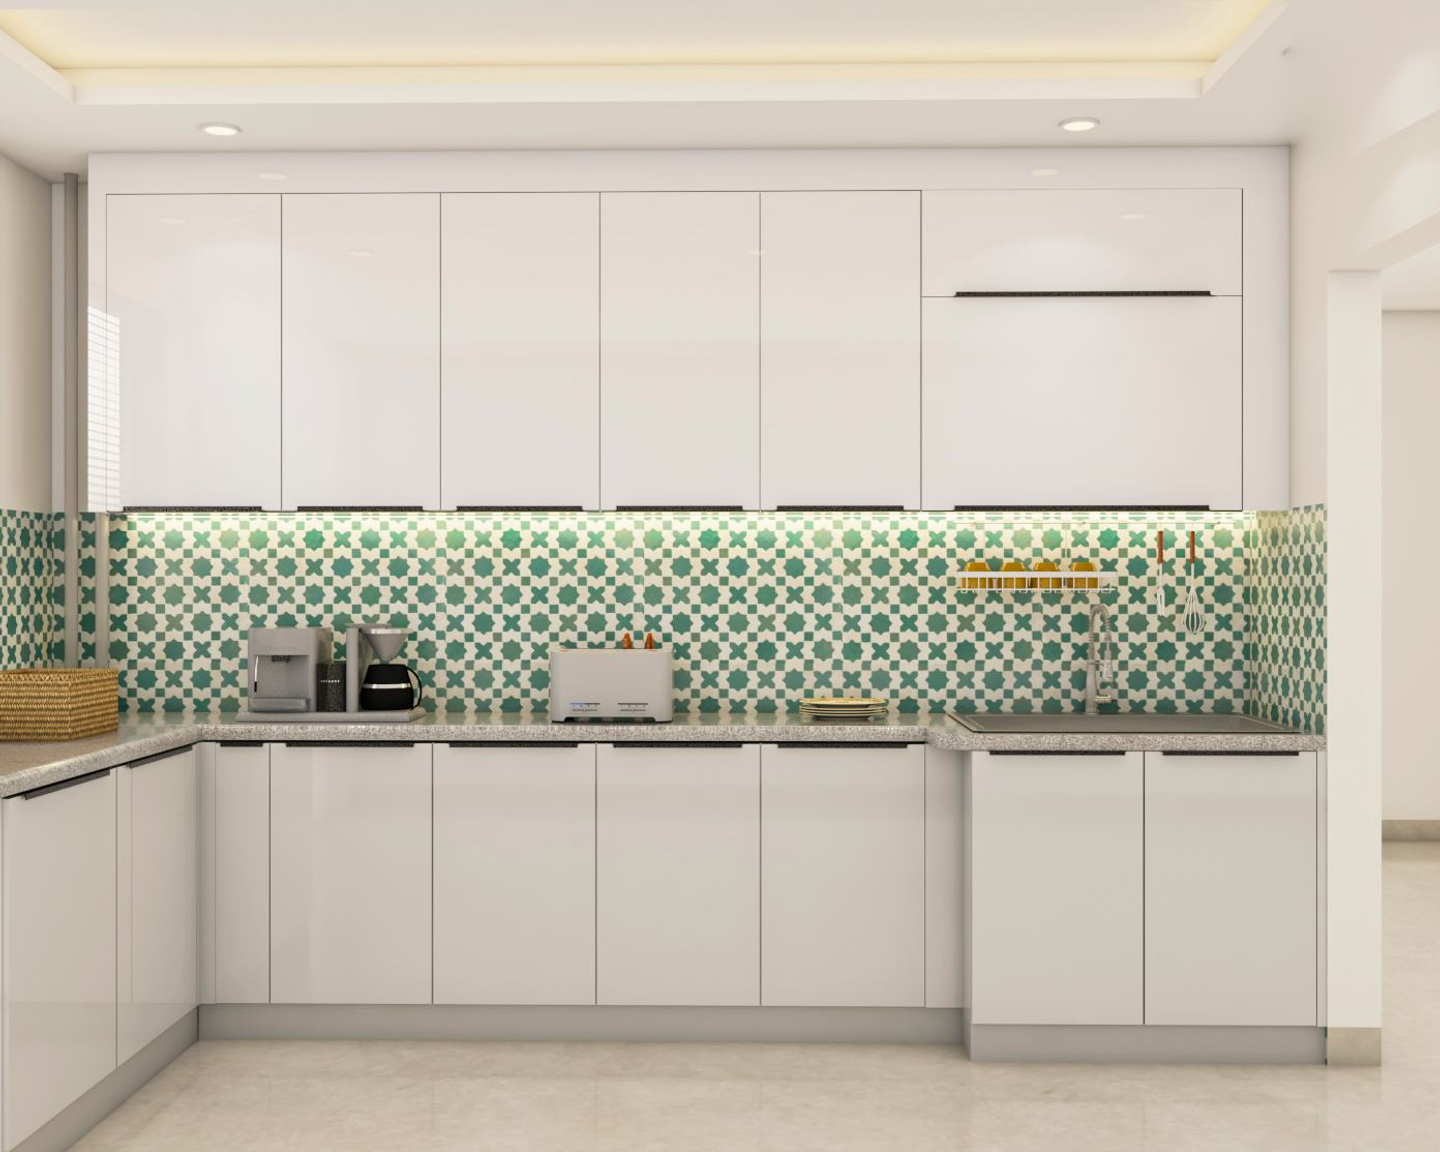 U-Shaped Modern Kitchen Design With Green Dado Tiles